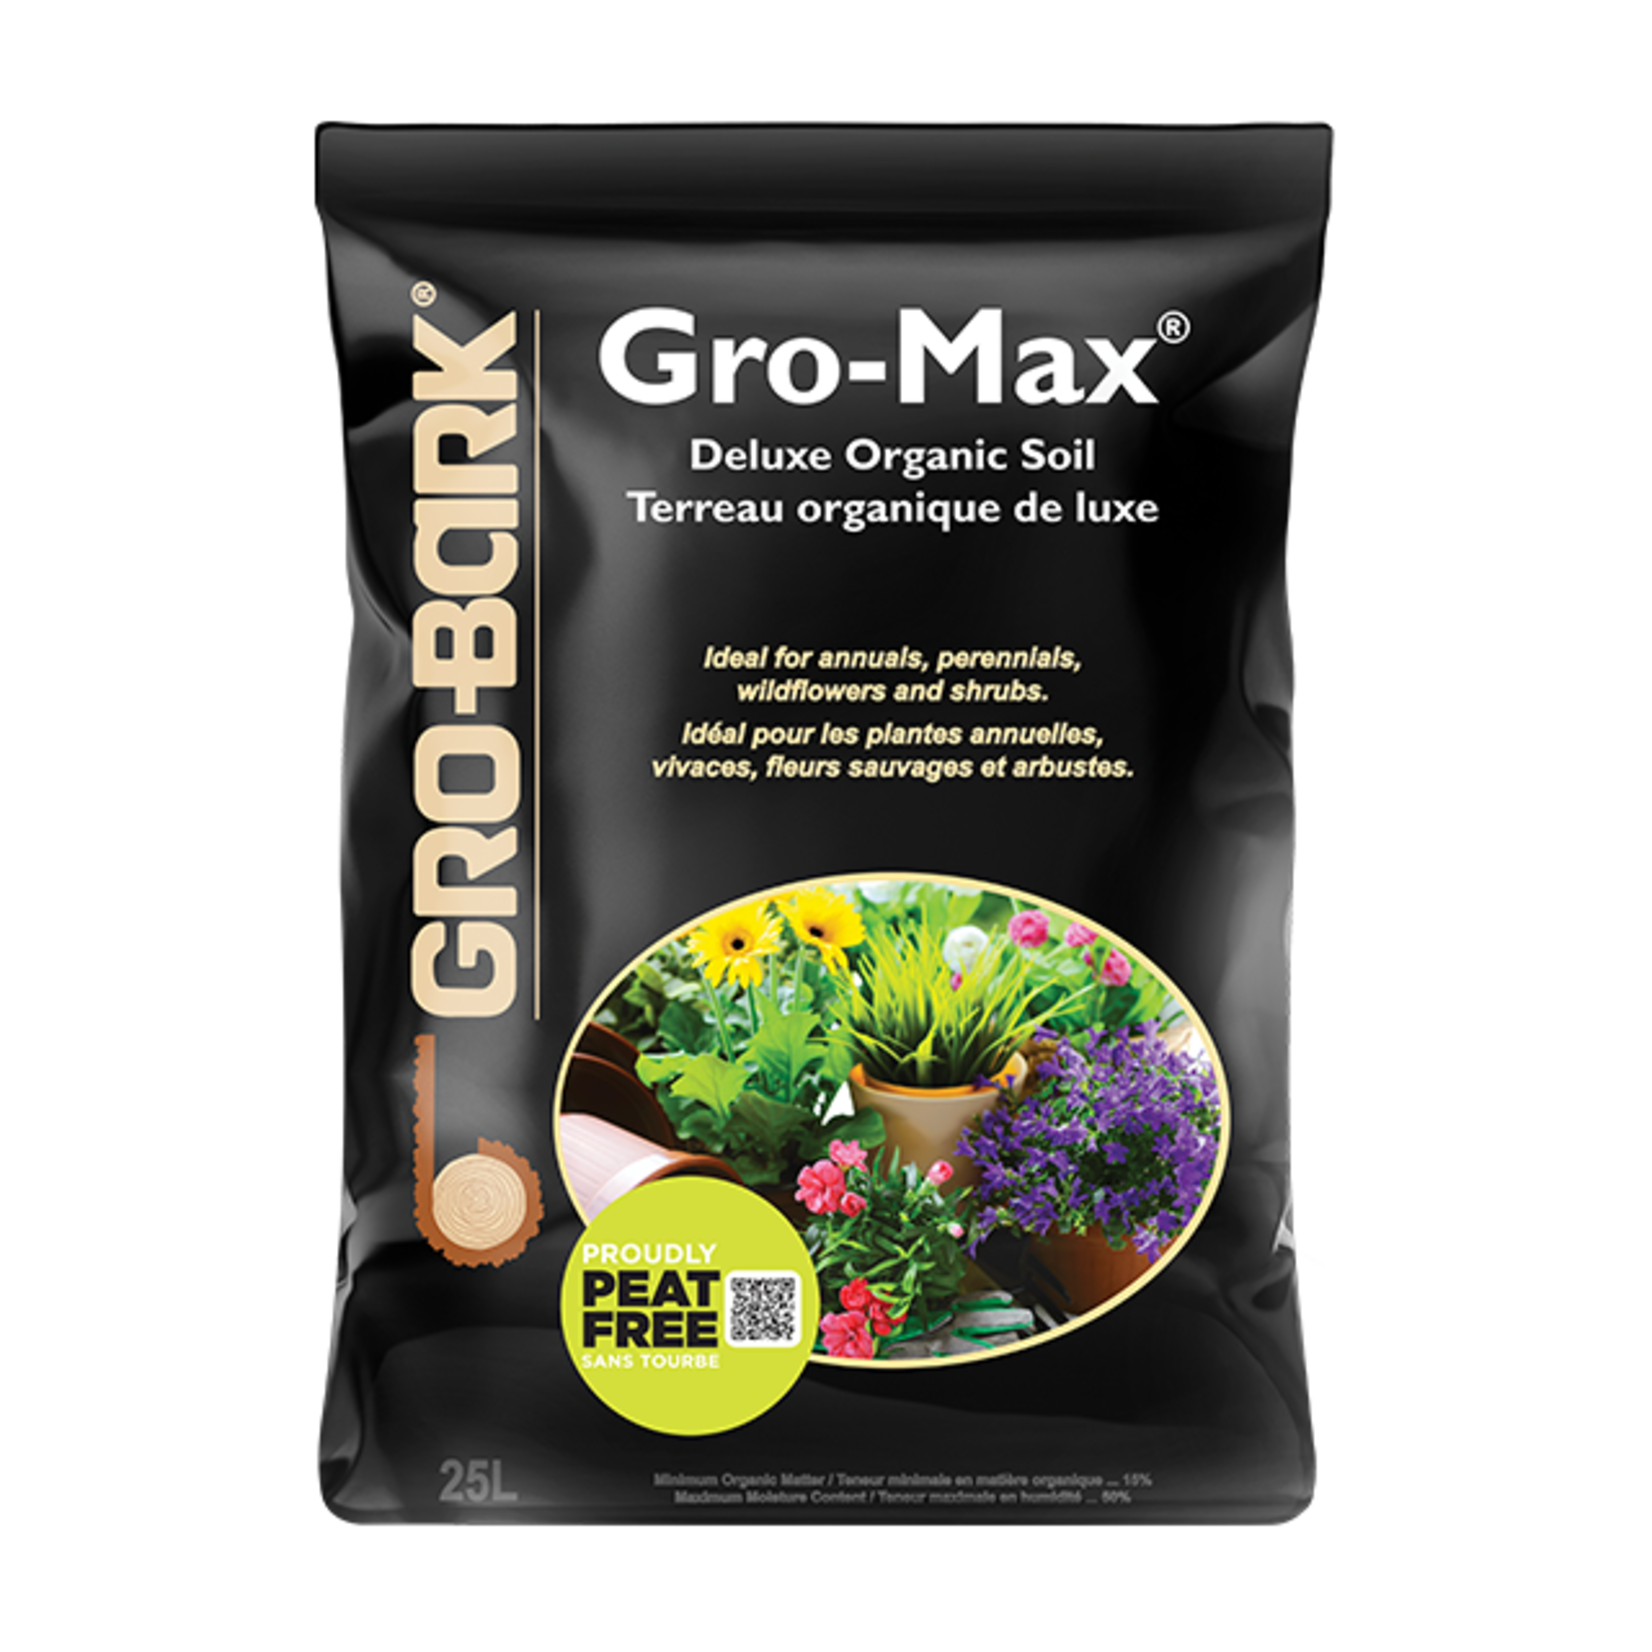 Gro-Max Deluxe Organic - 25L Peat Free